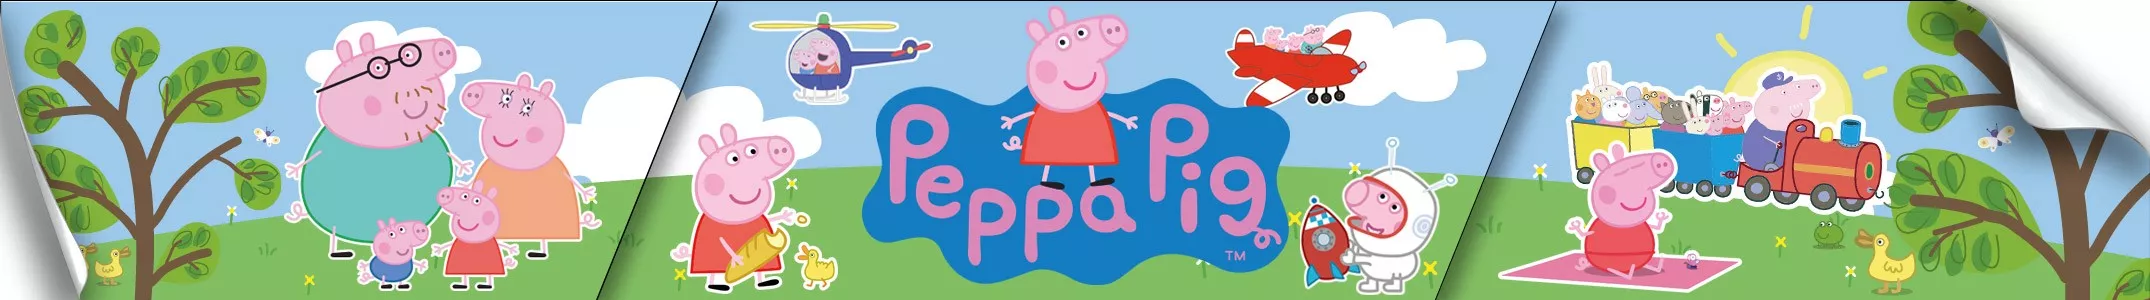 Stickers autocollants Peppa pig